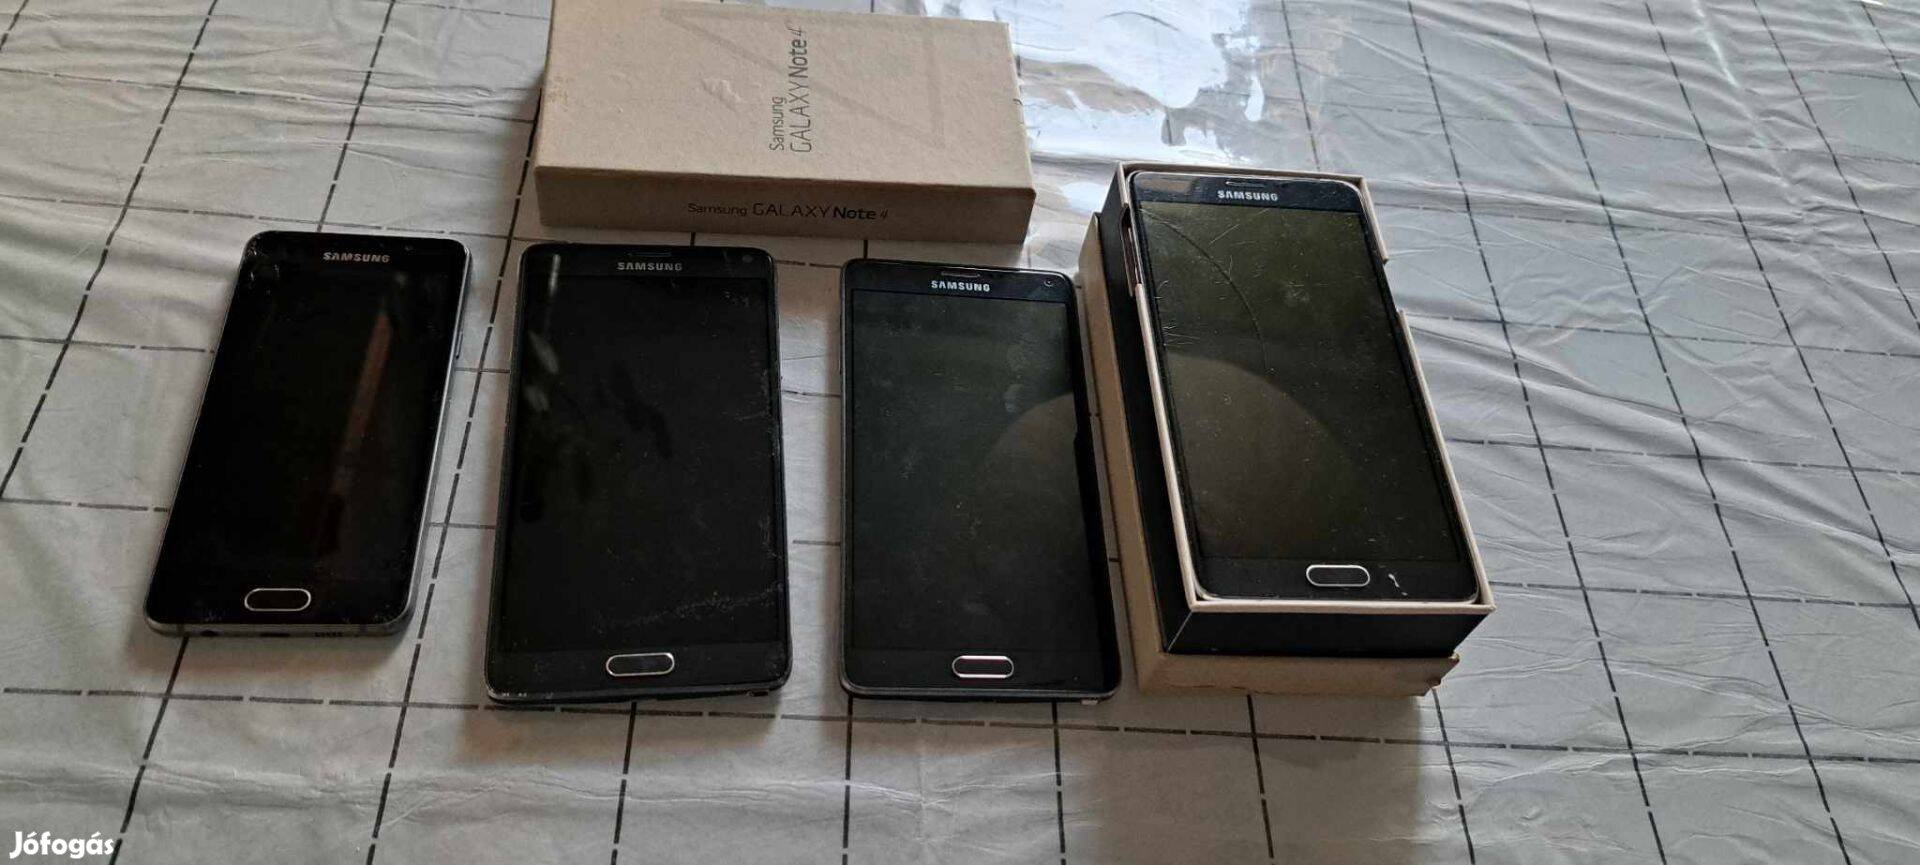 Samsung mobil telefonok javitásra eladoak